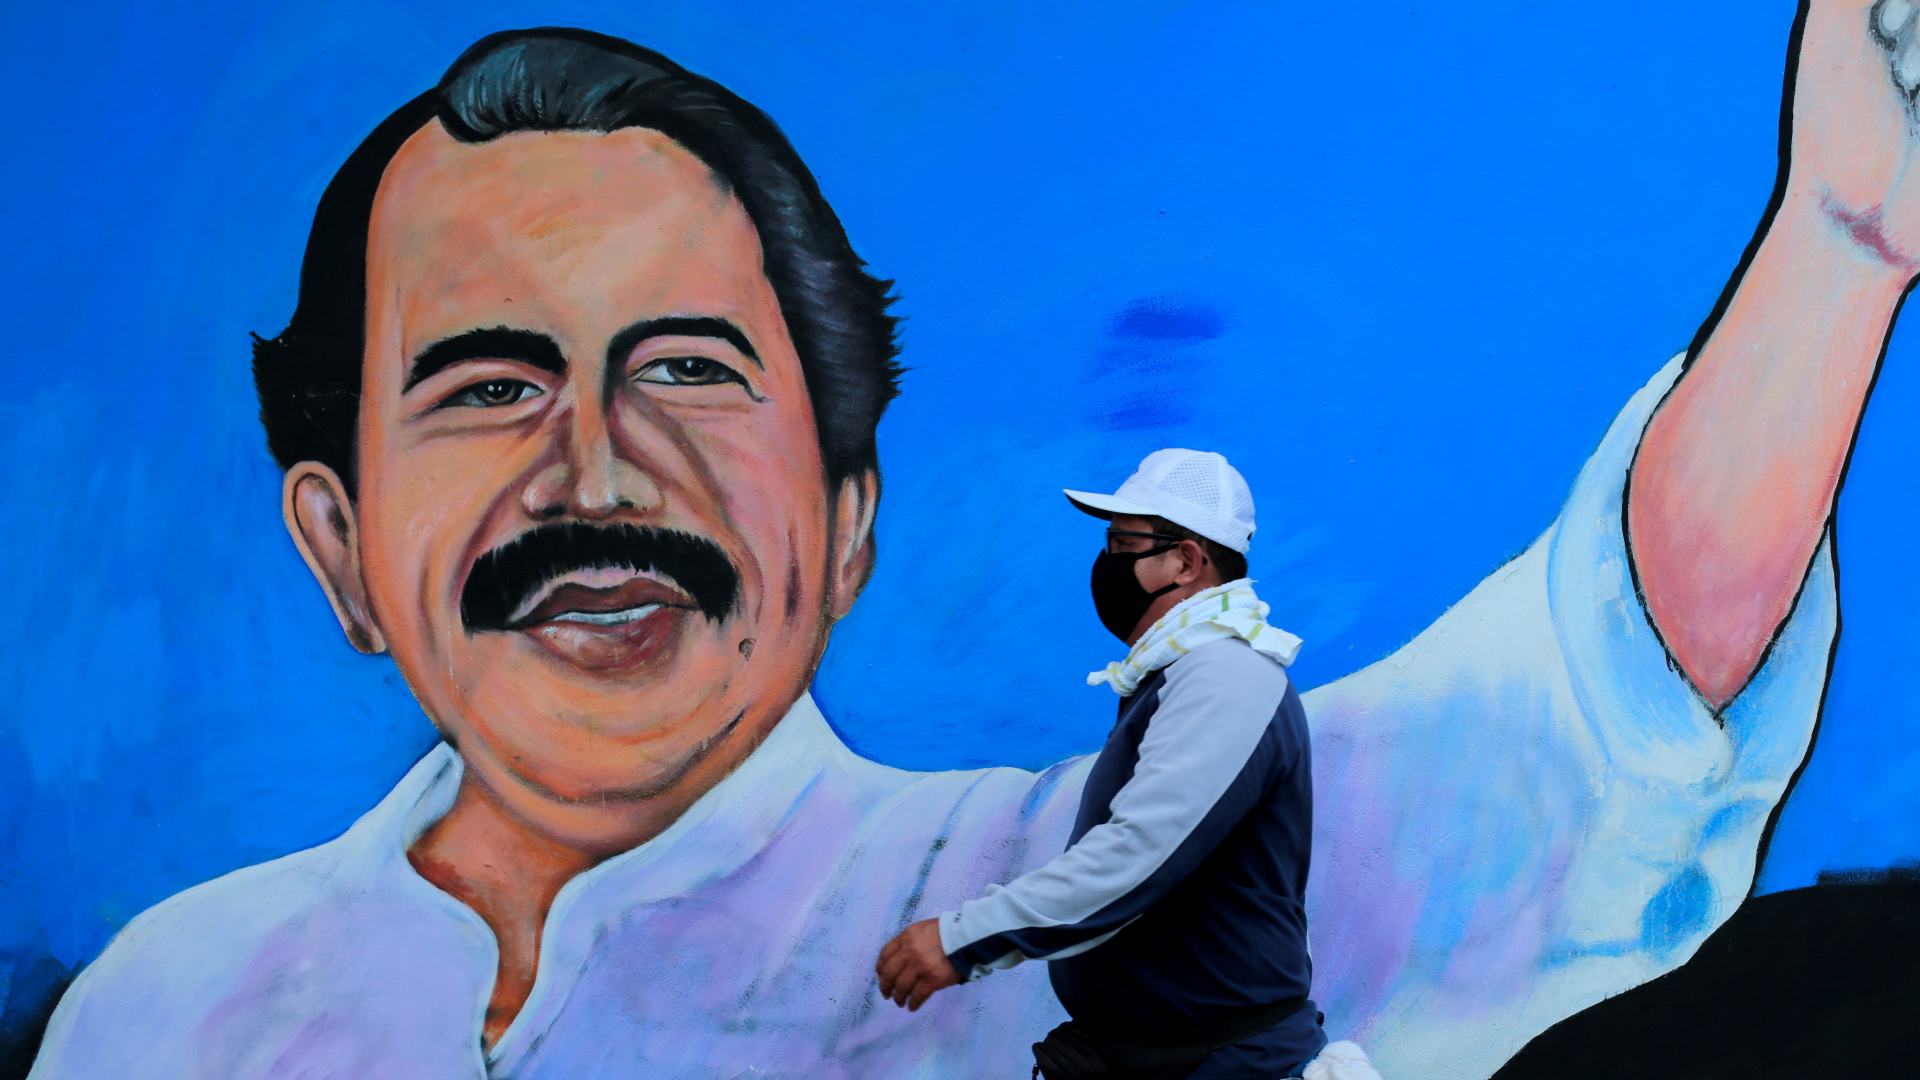 Wandgemälde von Präsident Ortega in Nicaraguas Hauptstadt Managua